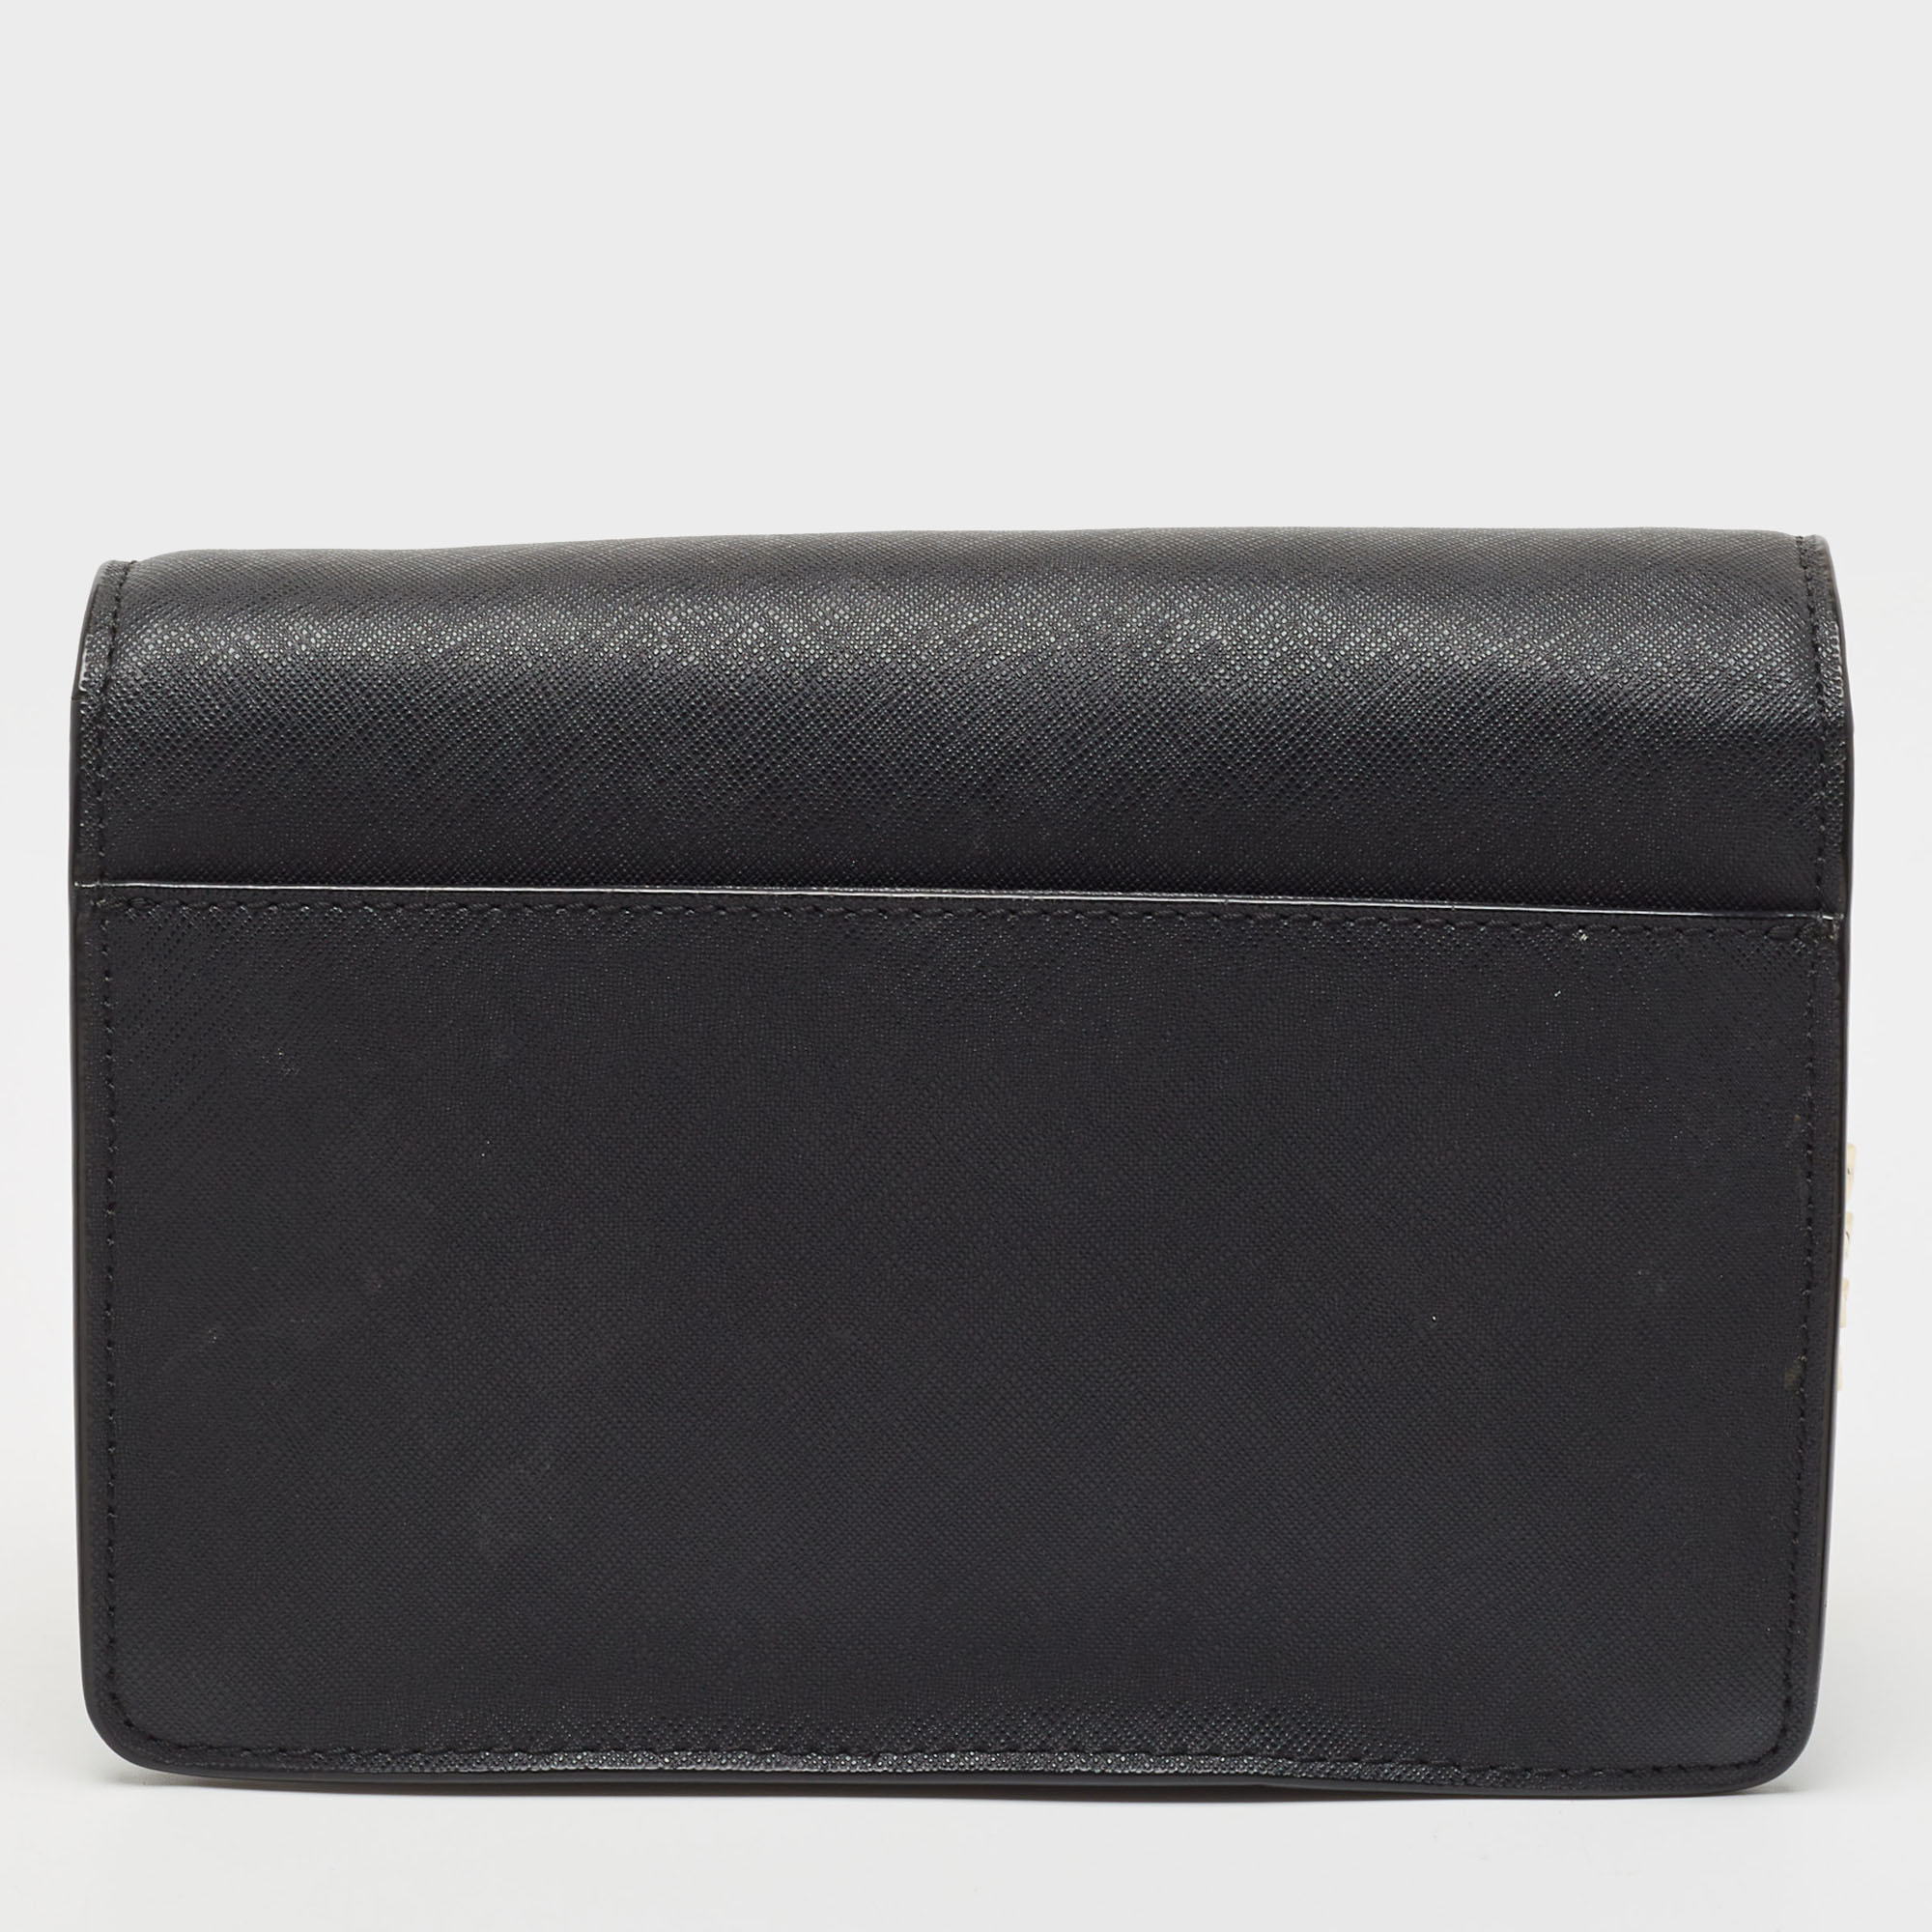 Michael Kors Black Leather Daniela Crossbody Bag